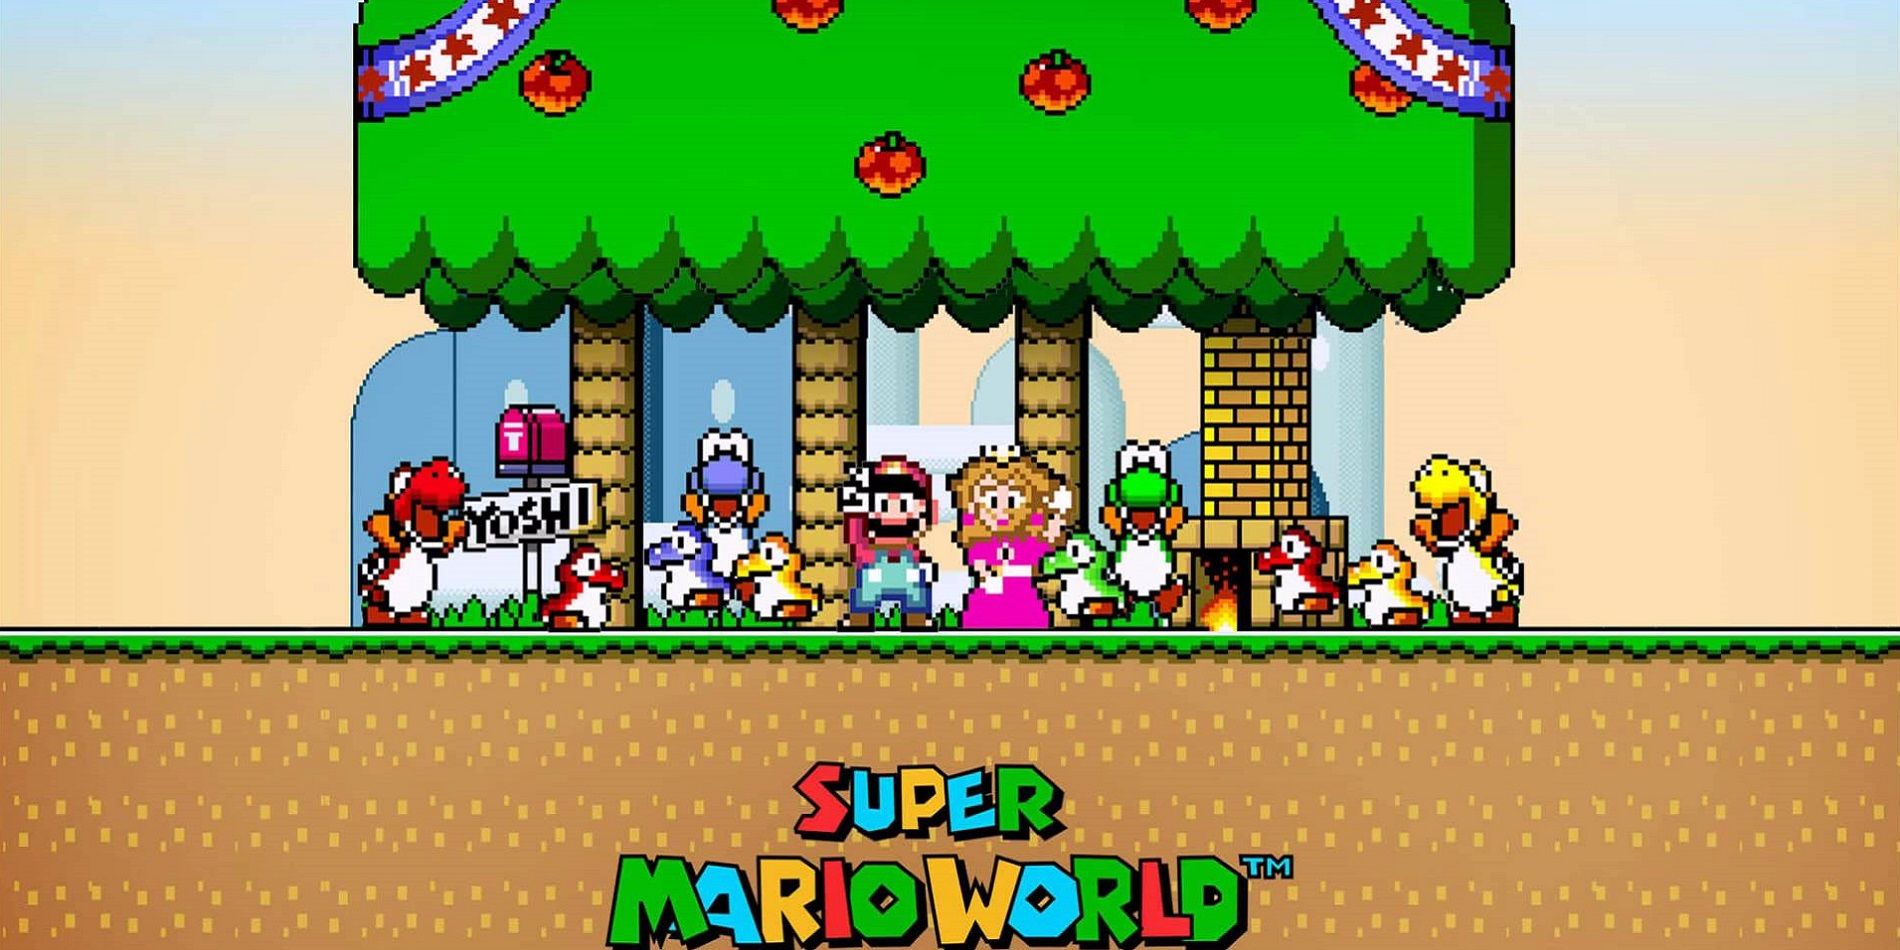 Super Mario World video game